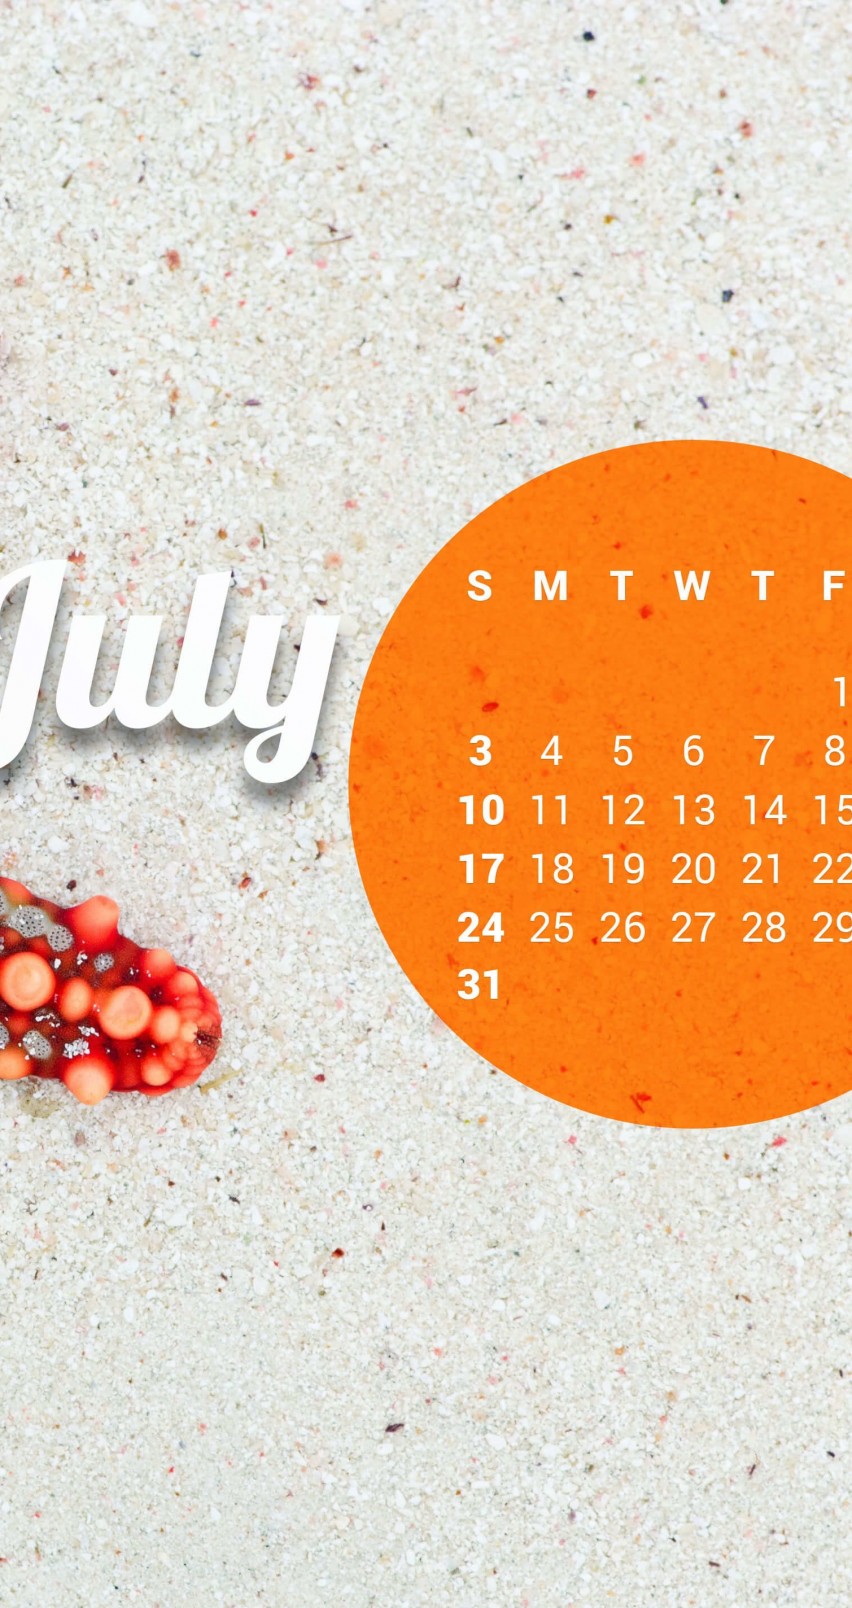 July 2016 Calendar Wallpaper for Apple iPhone 6 / 6s